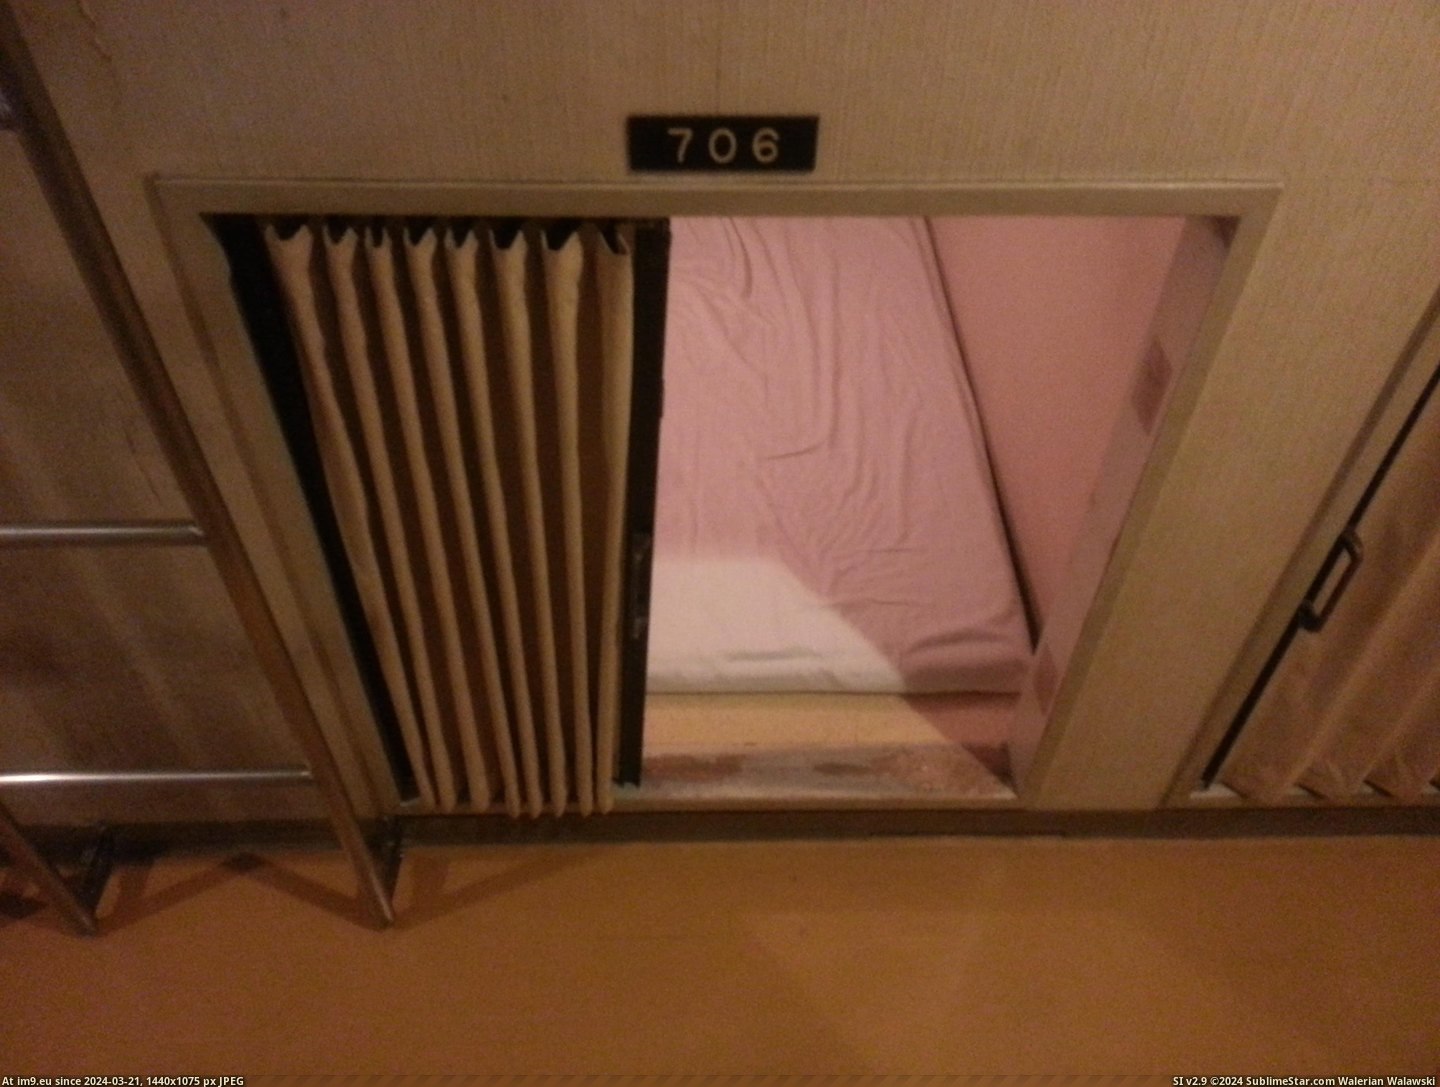 #Long #Hotel #Capsule #Week #Tokyo [Pics] My week-long home at a Tokyo capsule hotel 2 Pic. (Image of album My r/PICS favs))